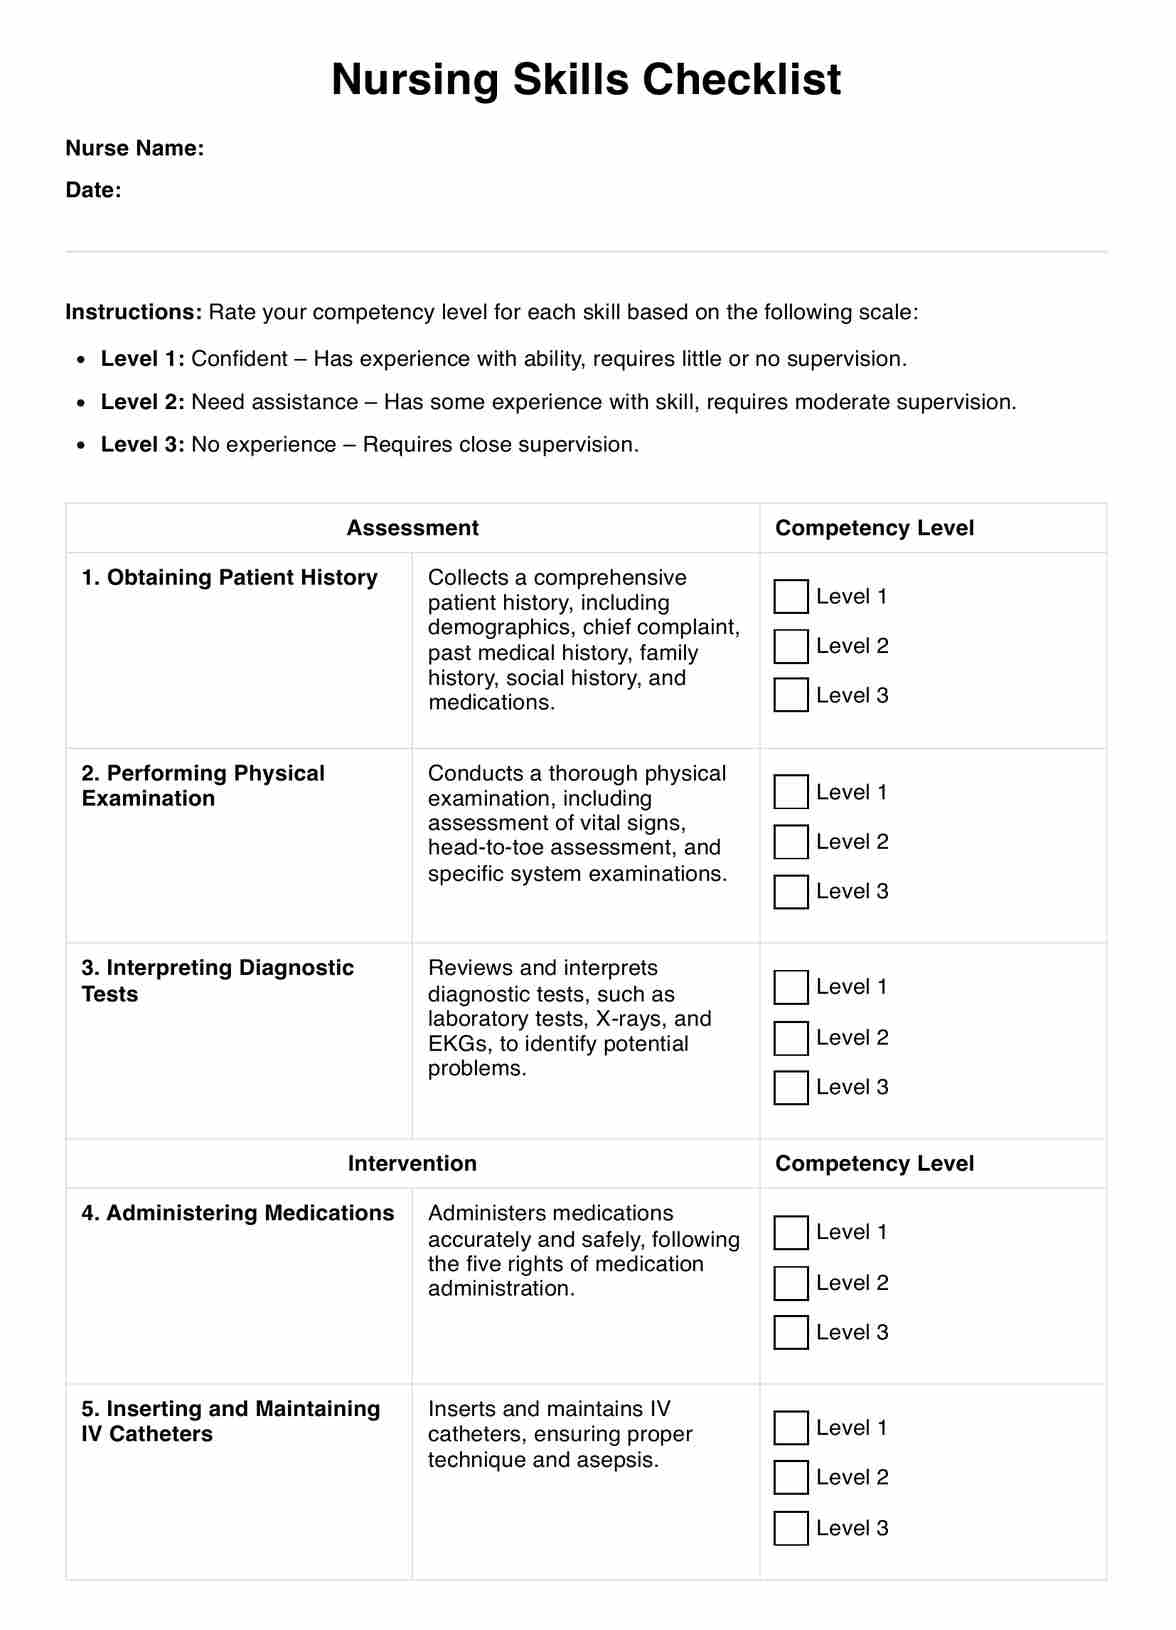 Nursing Skills Checklist Template PDF Example